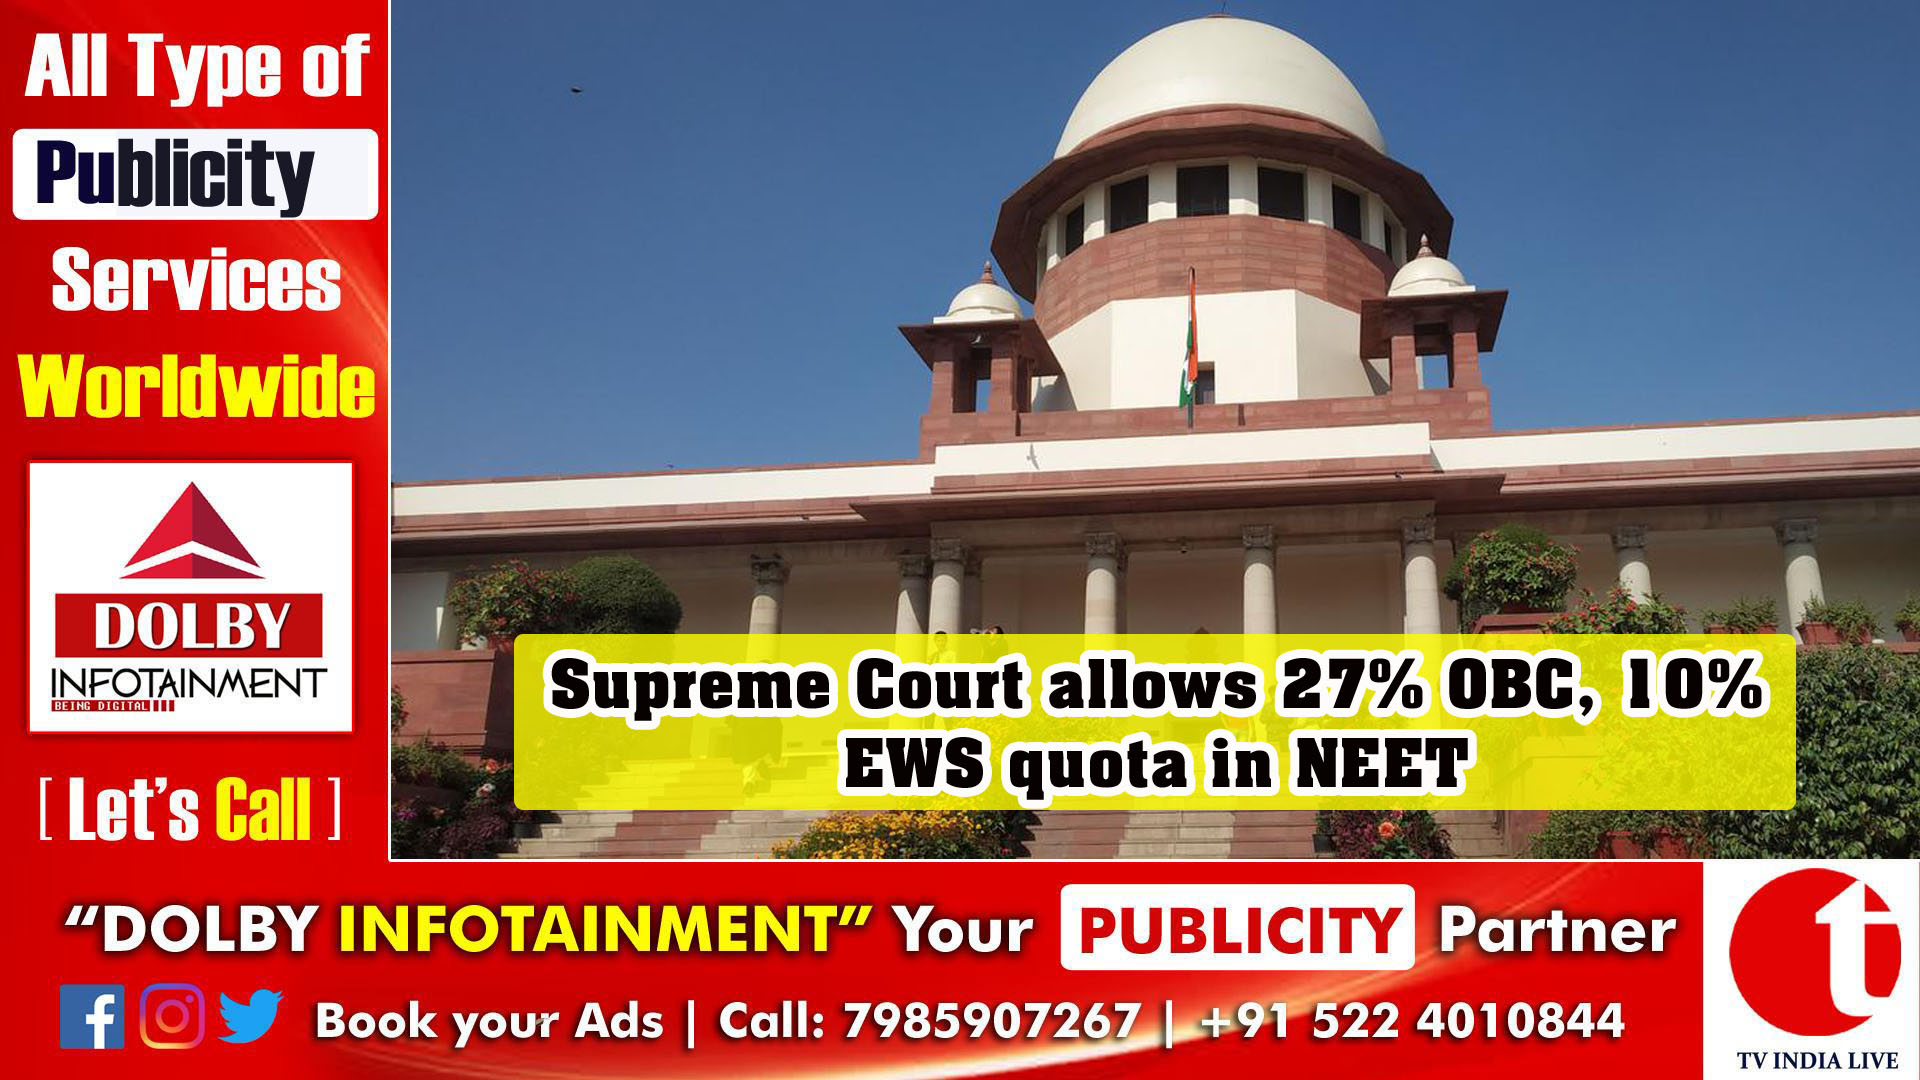 Supreme Court allows 27% OBC, 10% EWS quota in NEET